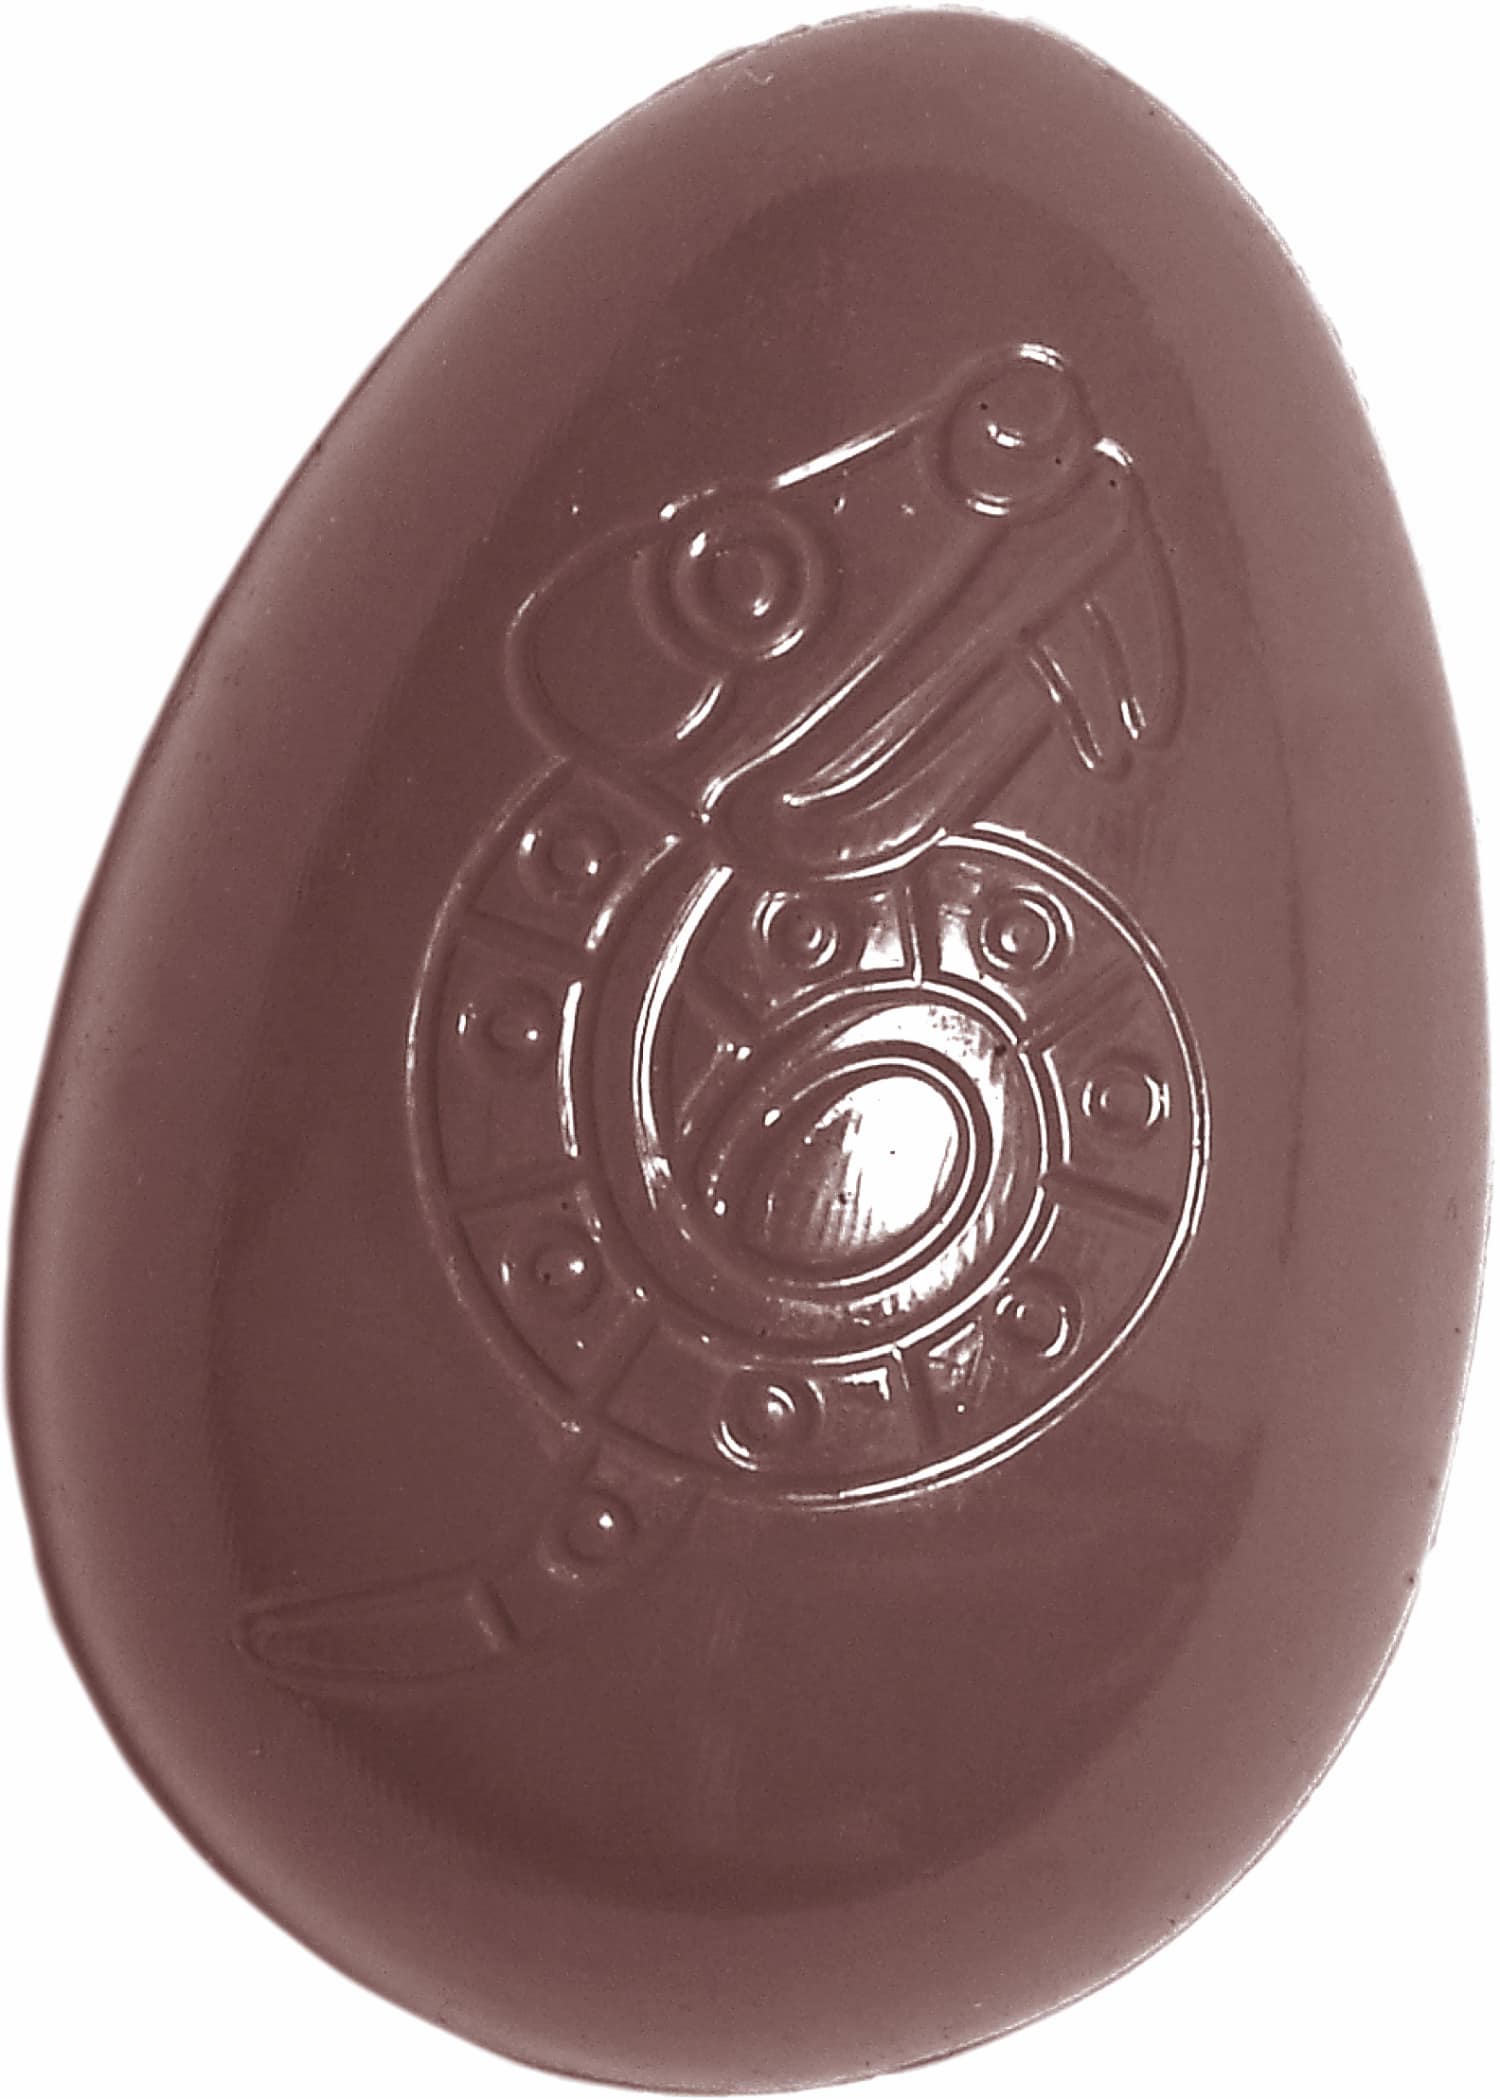 Schokoladenform "Osterei" 421554